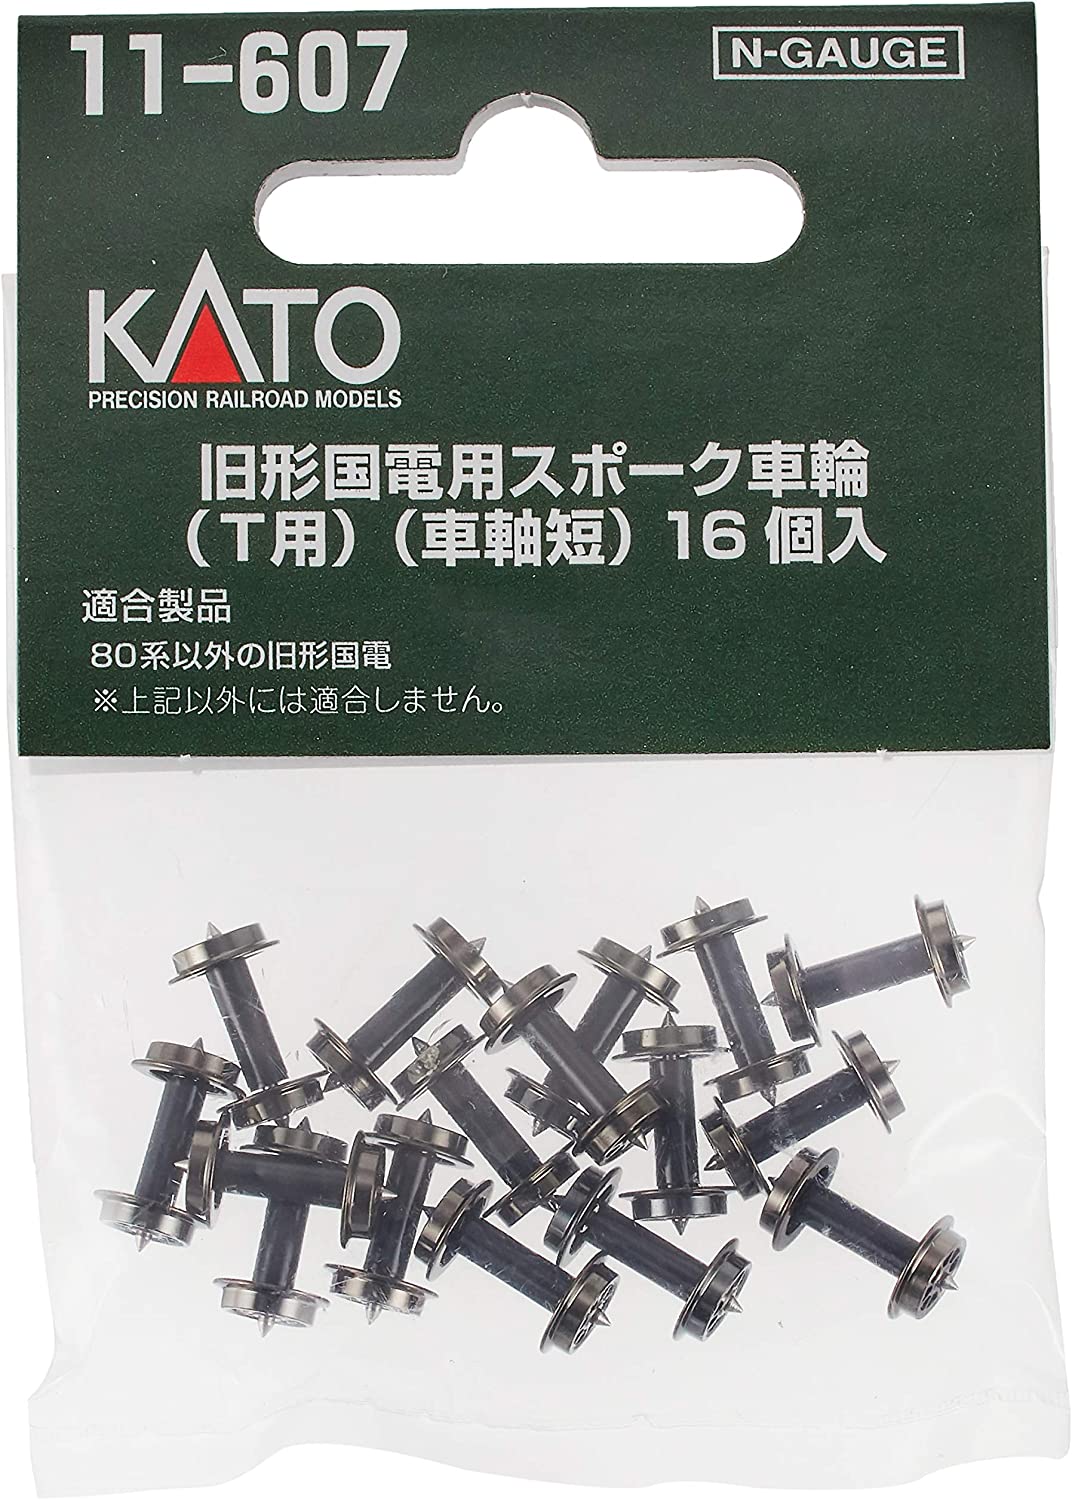 KATO Nゲージ 旧形国電用スポーク車輪 T用 16個入 11-607 鉄道模型用品